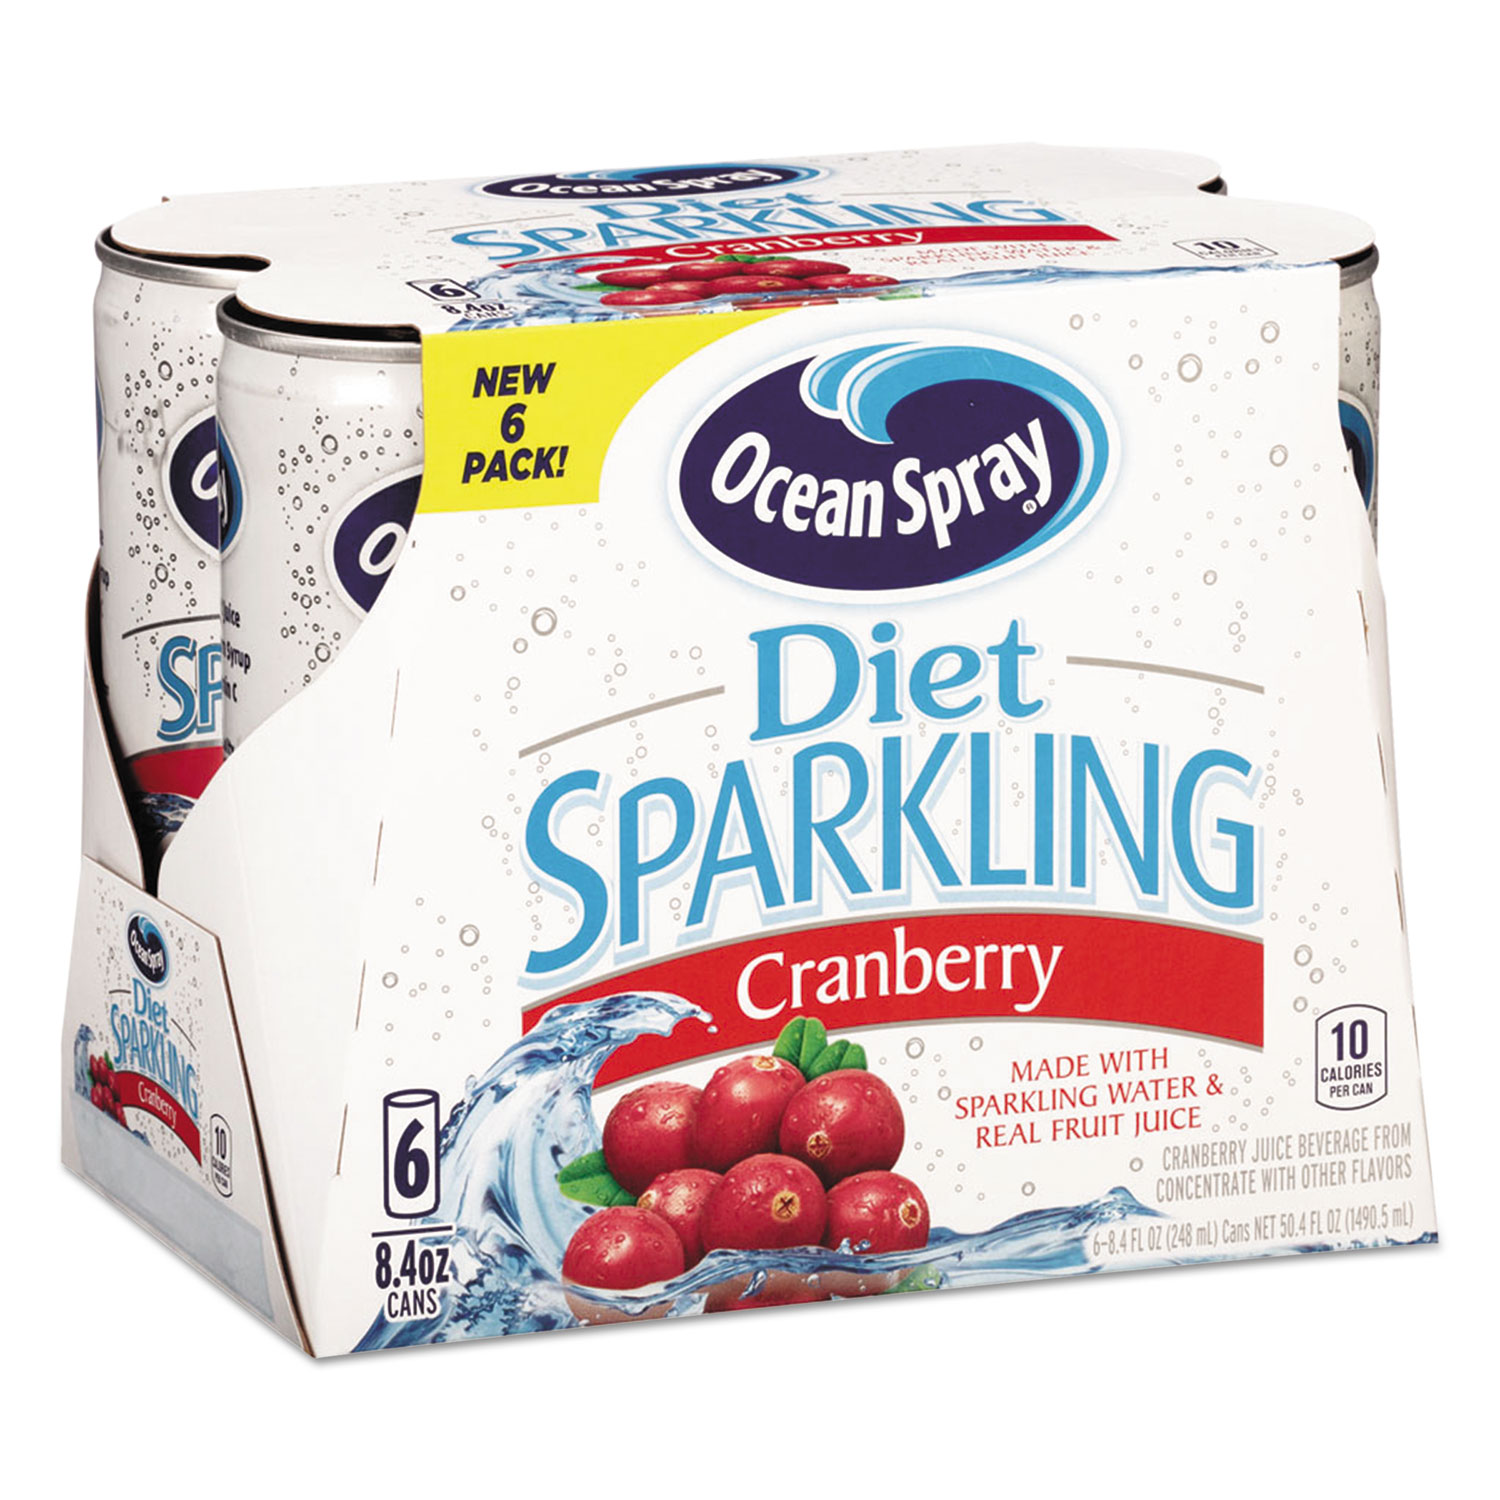 Sparkling Cranberry Juice, Diet, 8.4 oz Can, 6/Pack